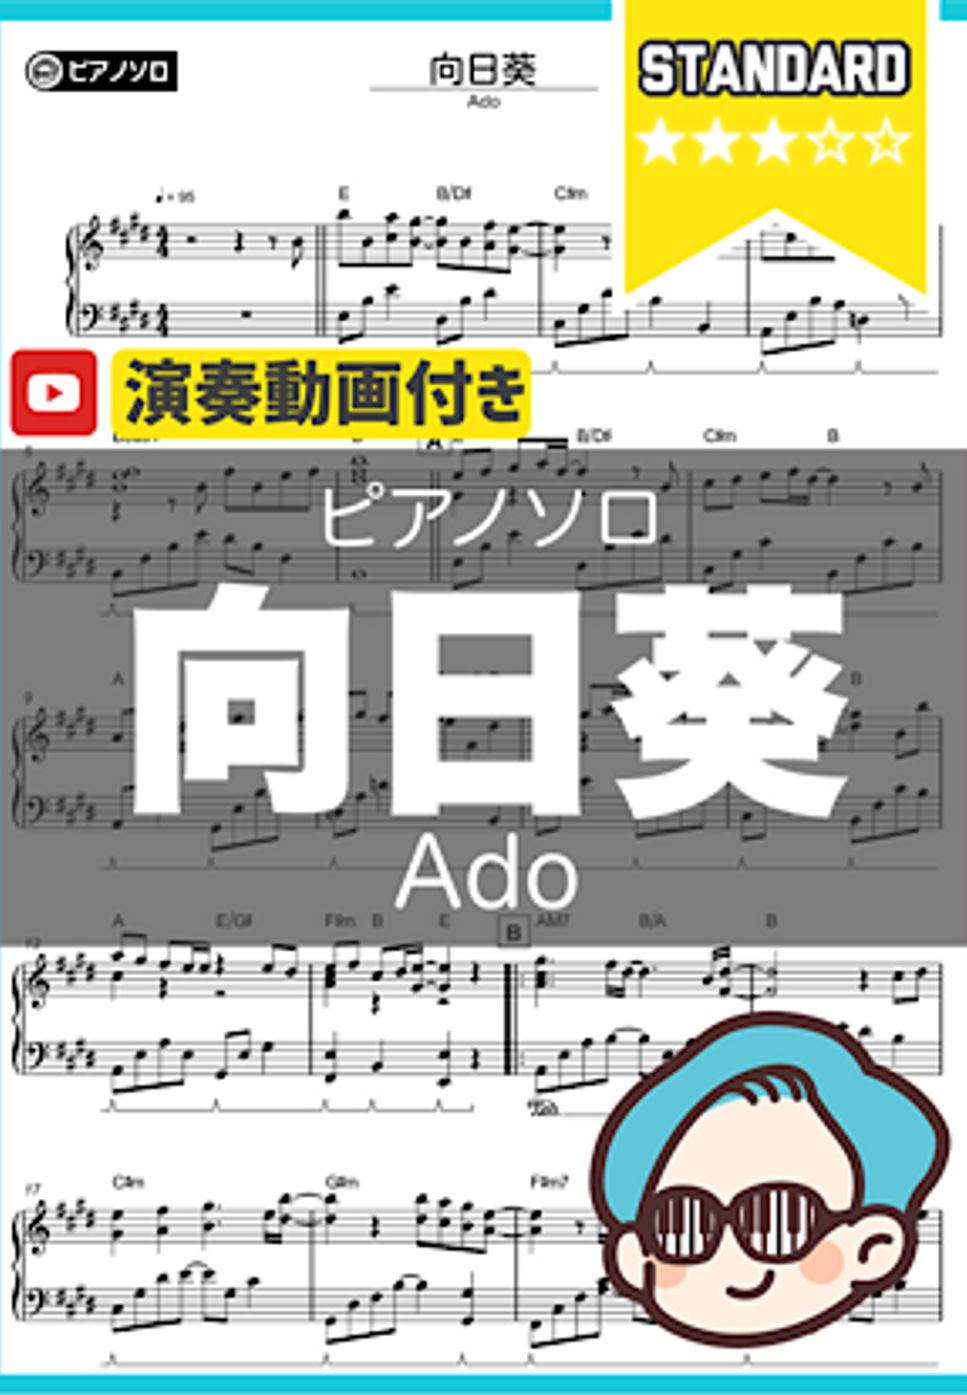 Ado - 向日葵 by シータピアノ